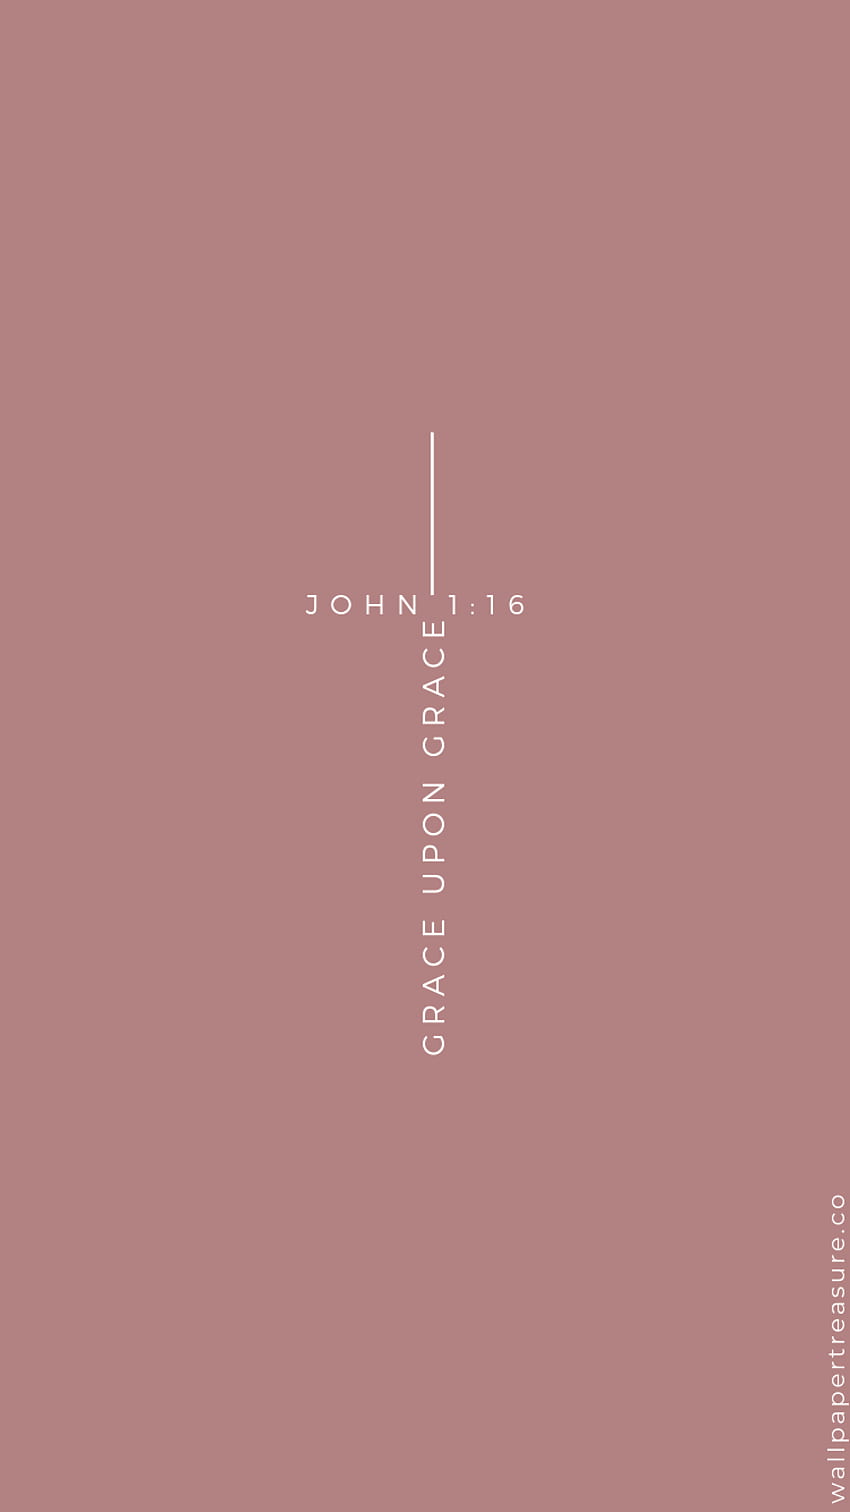 John 1:16 grace upon grace wallpaper background phone background phone wallpaper - Christian